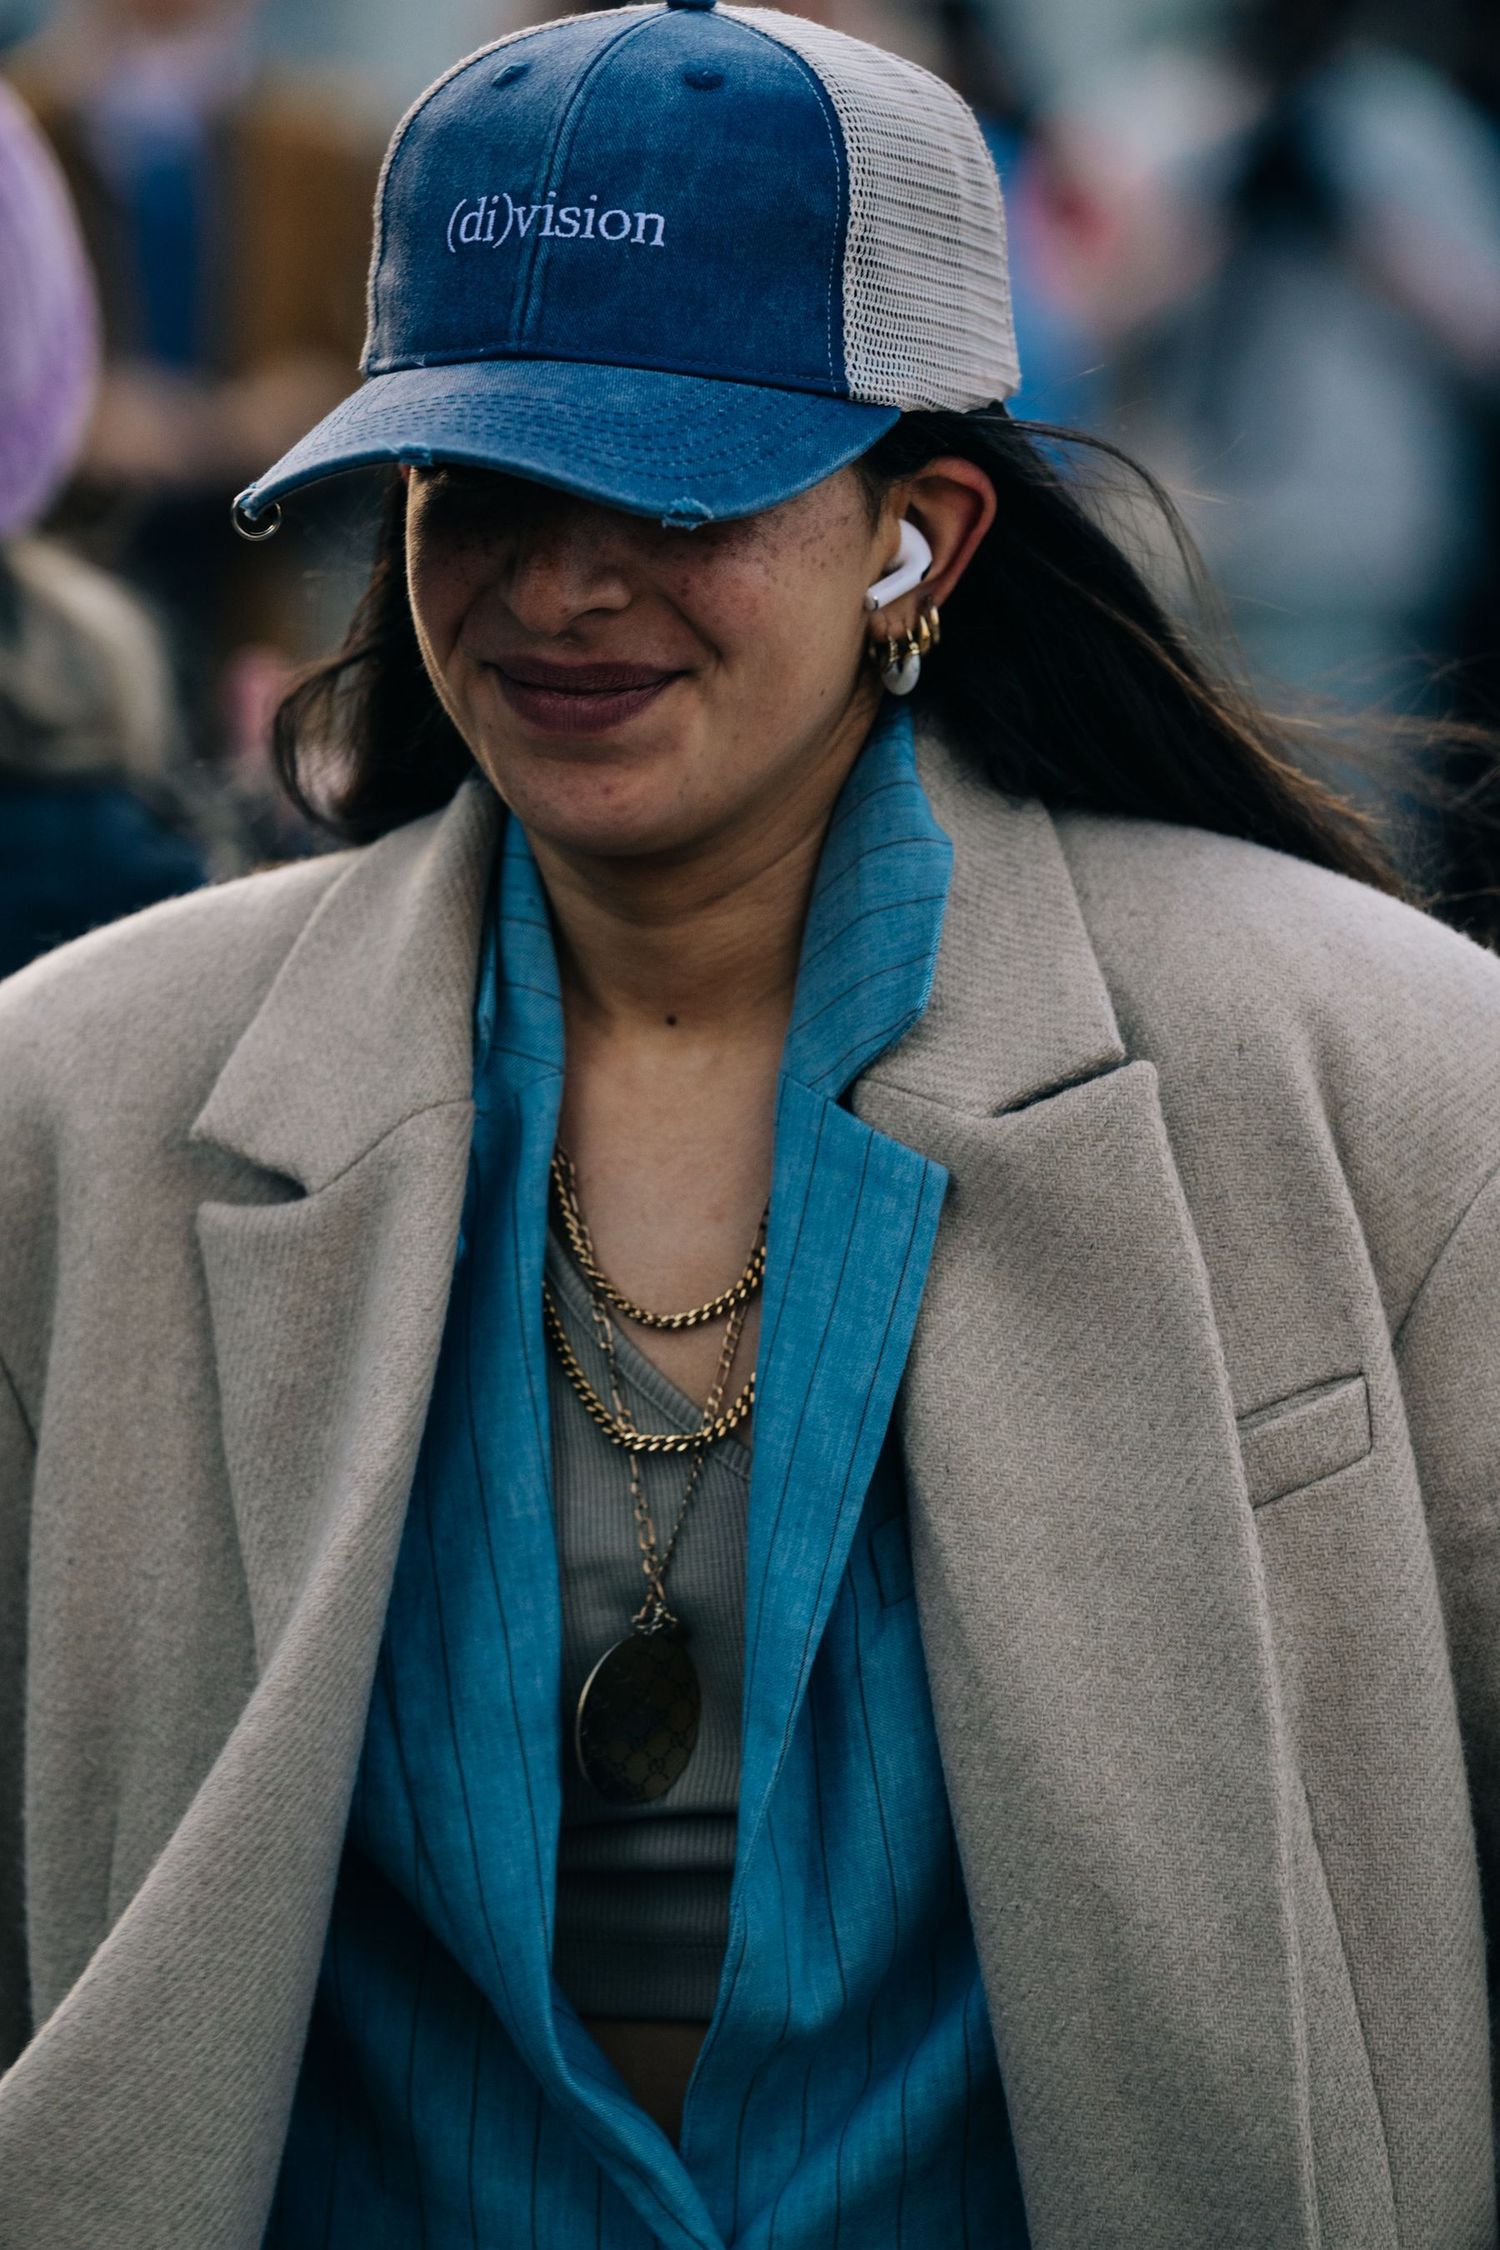 Baseball Caps Are Now Fashion - theFashionSpot